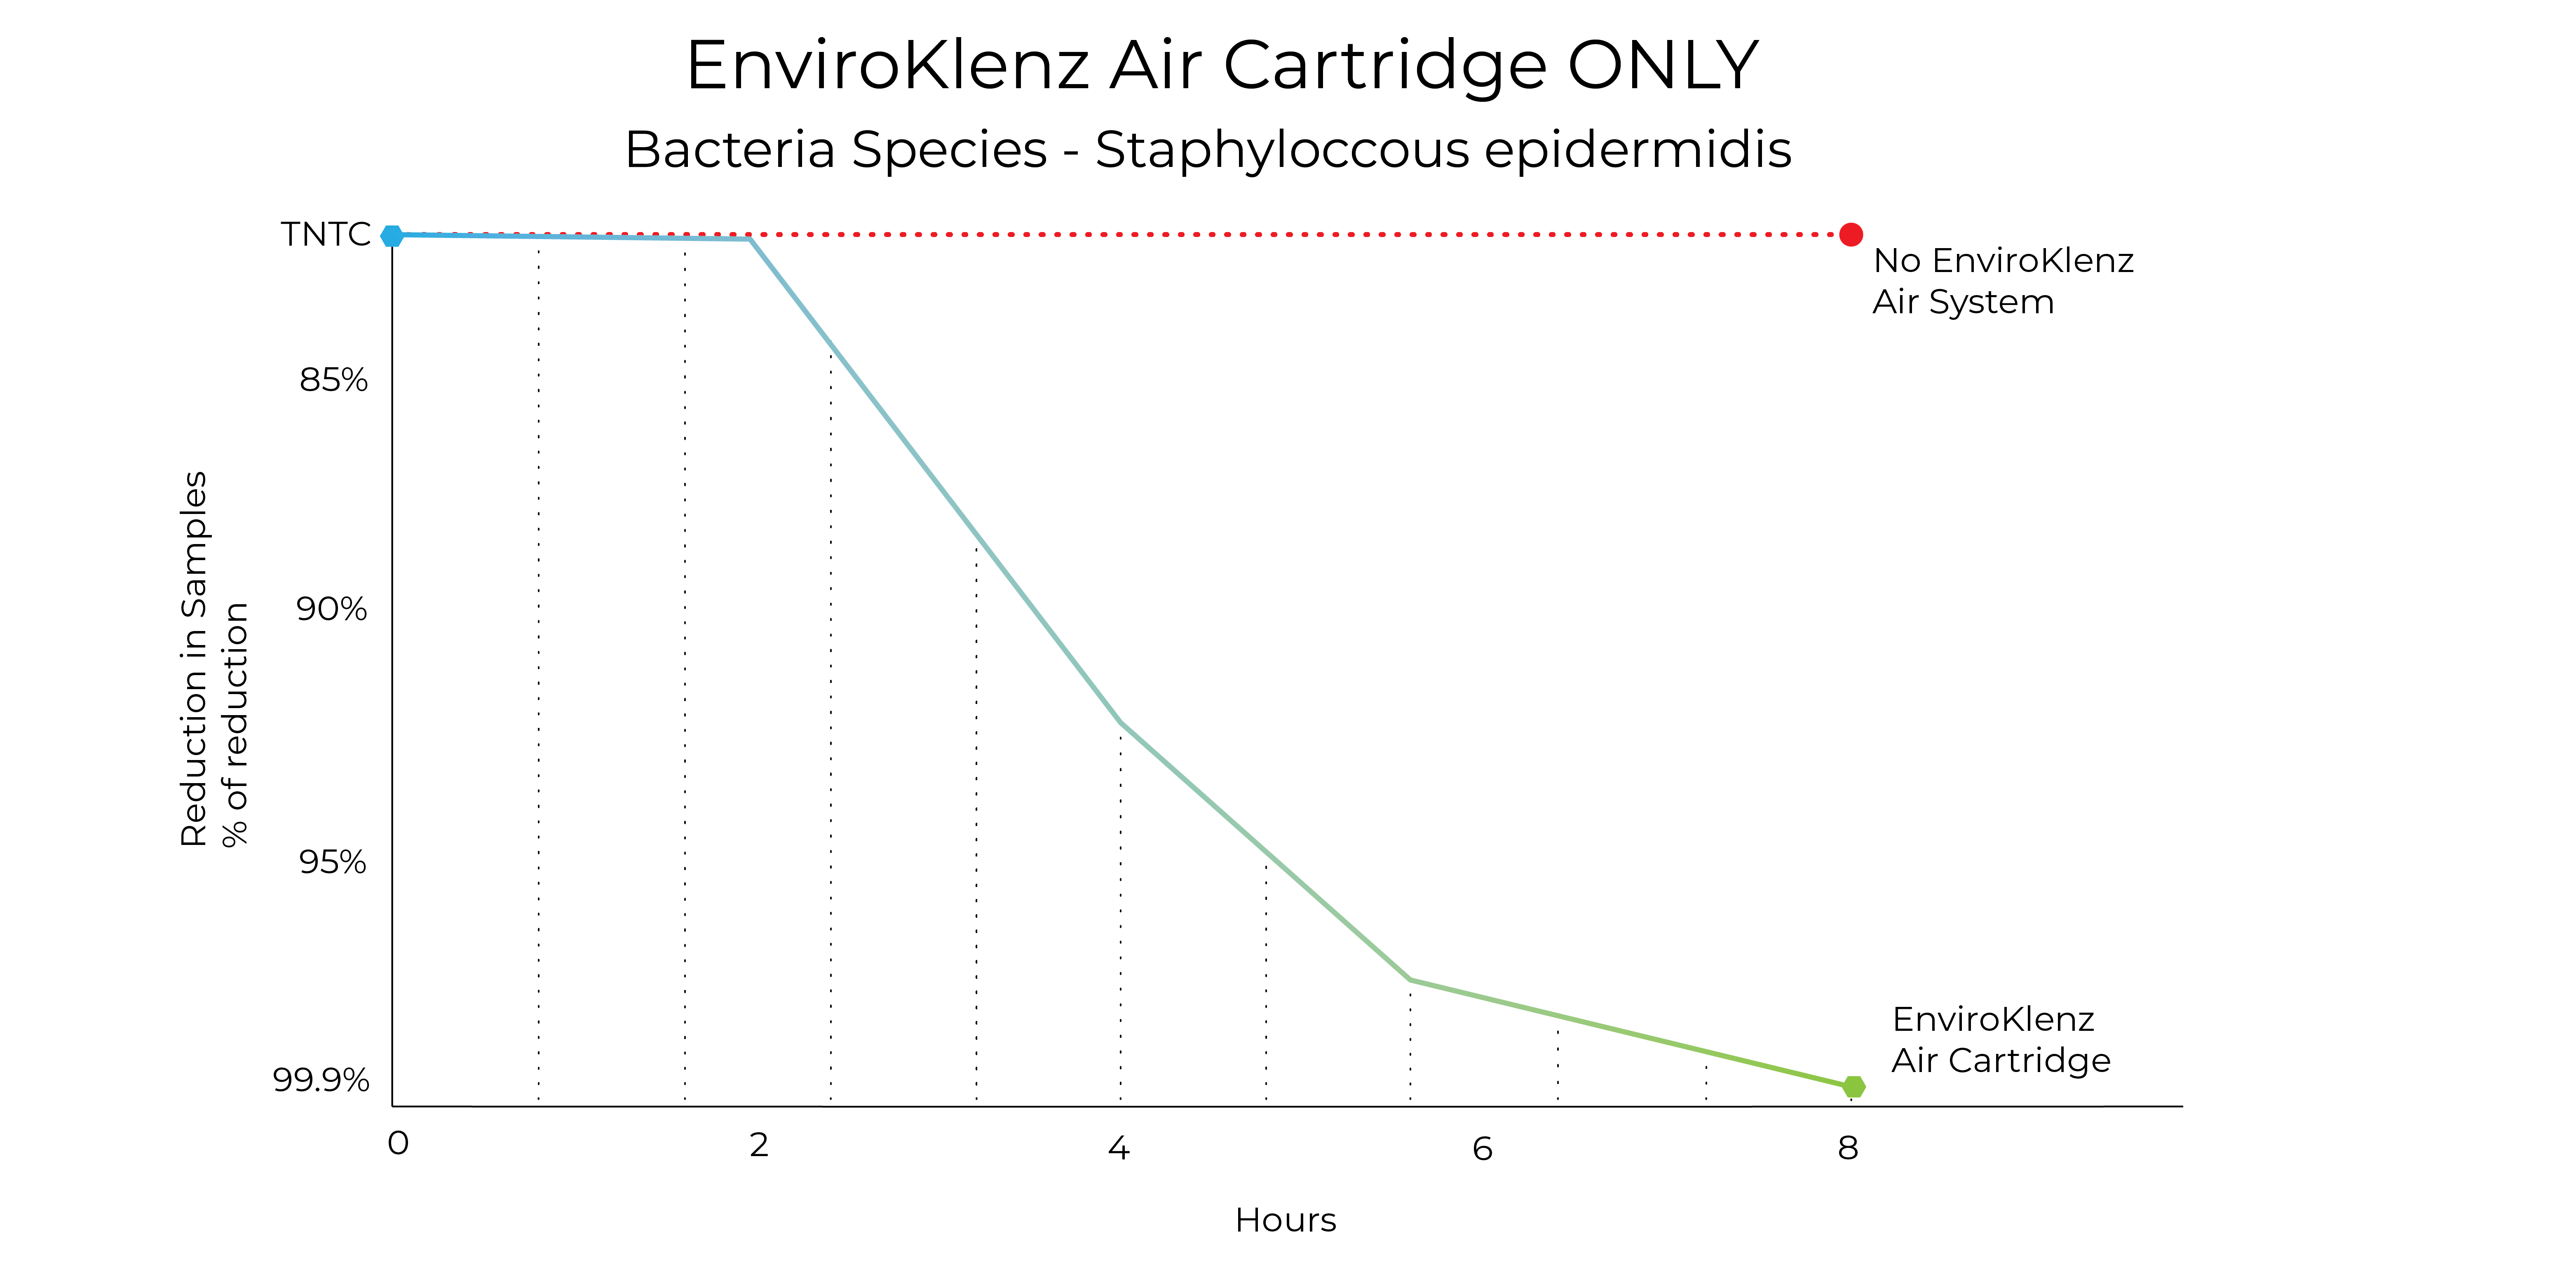 EnviroKlenz Air Cartridge vs. Staphyloccous Epidermidis